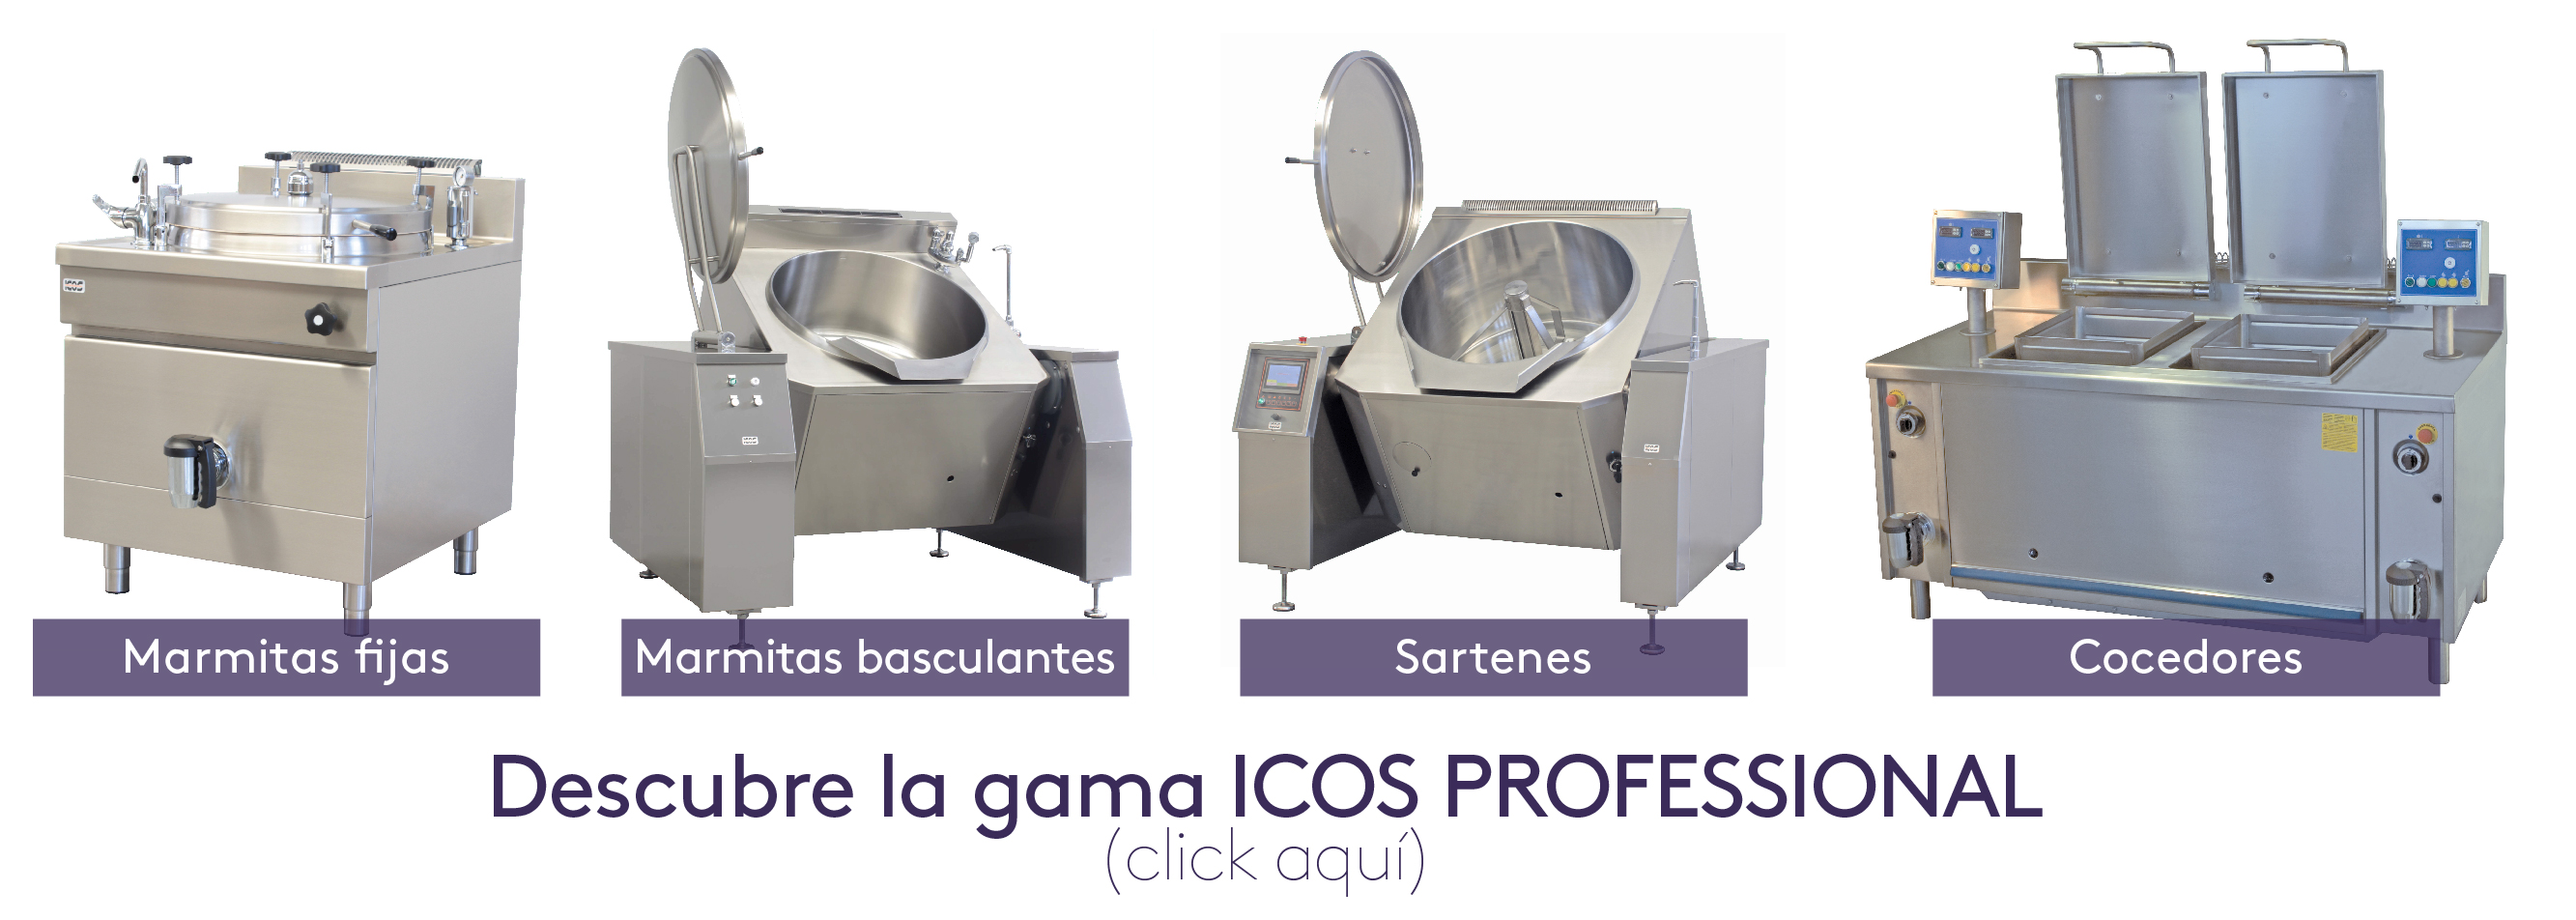 Gama Icos-01